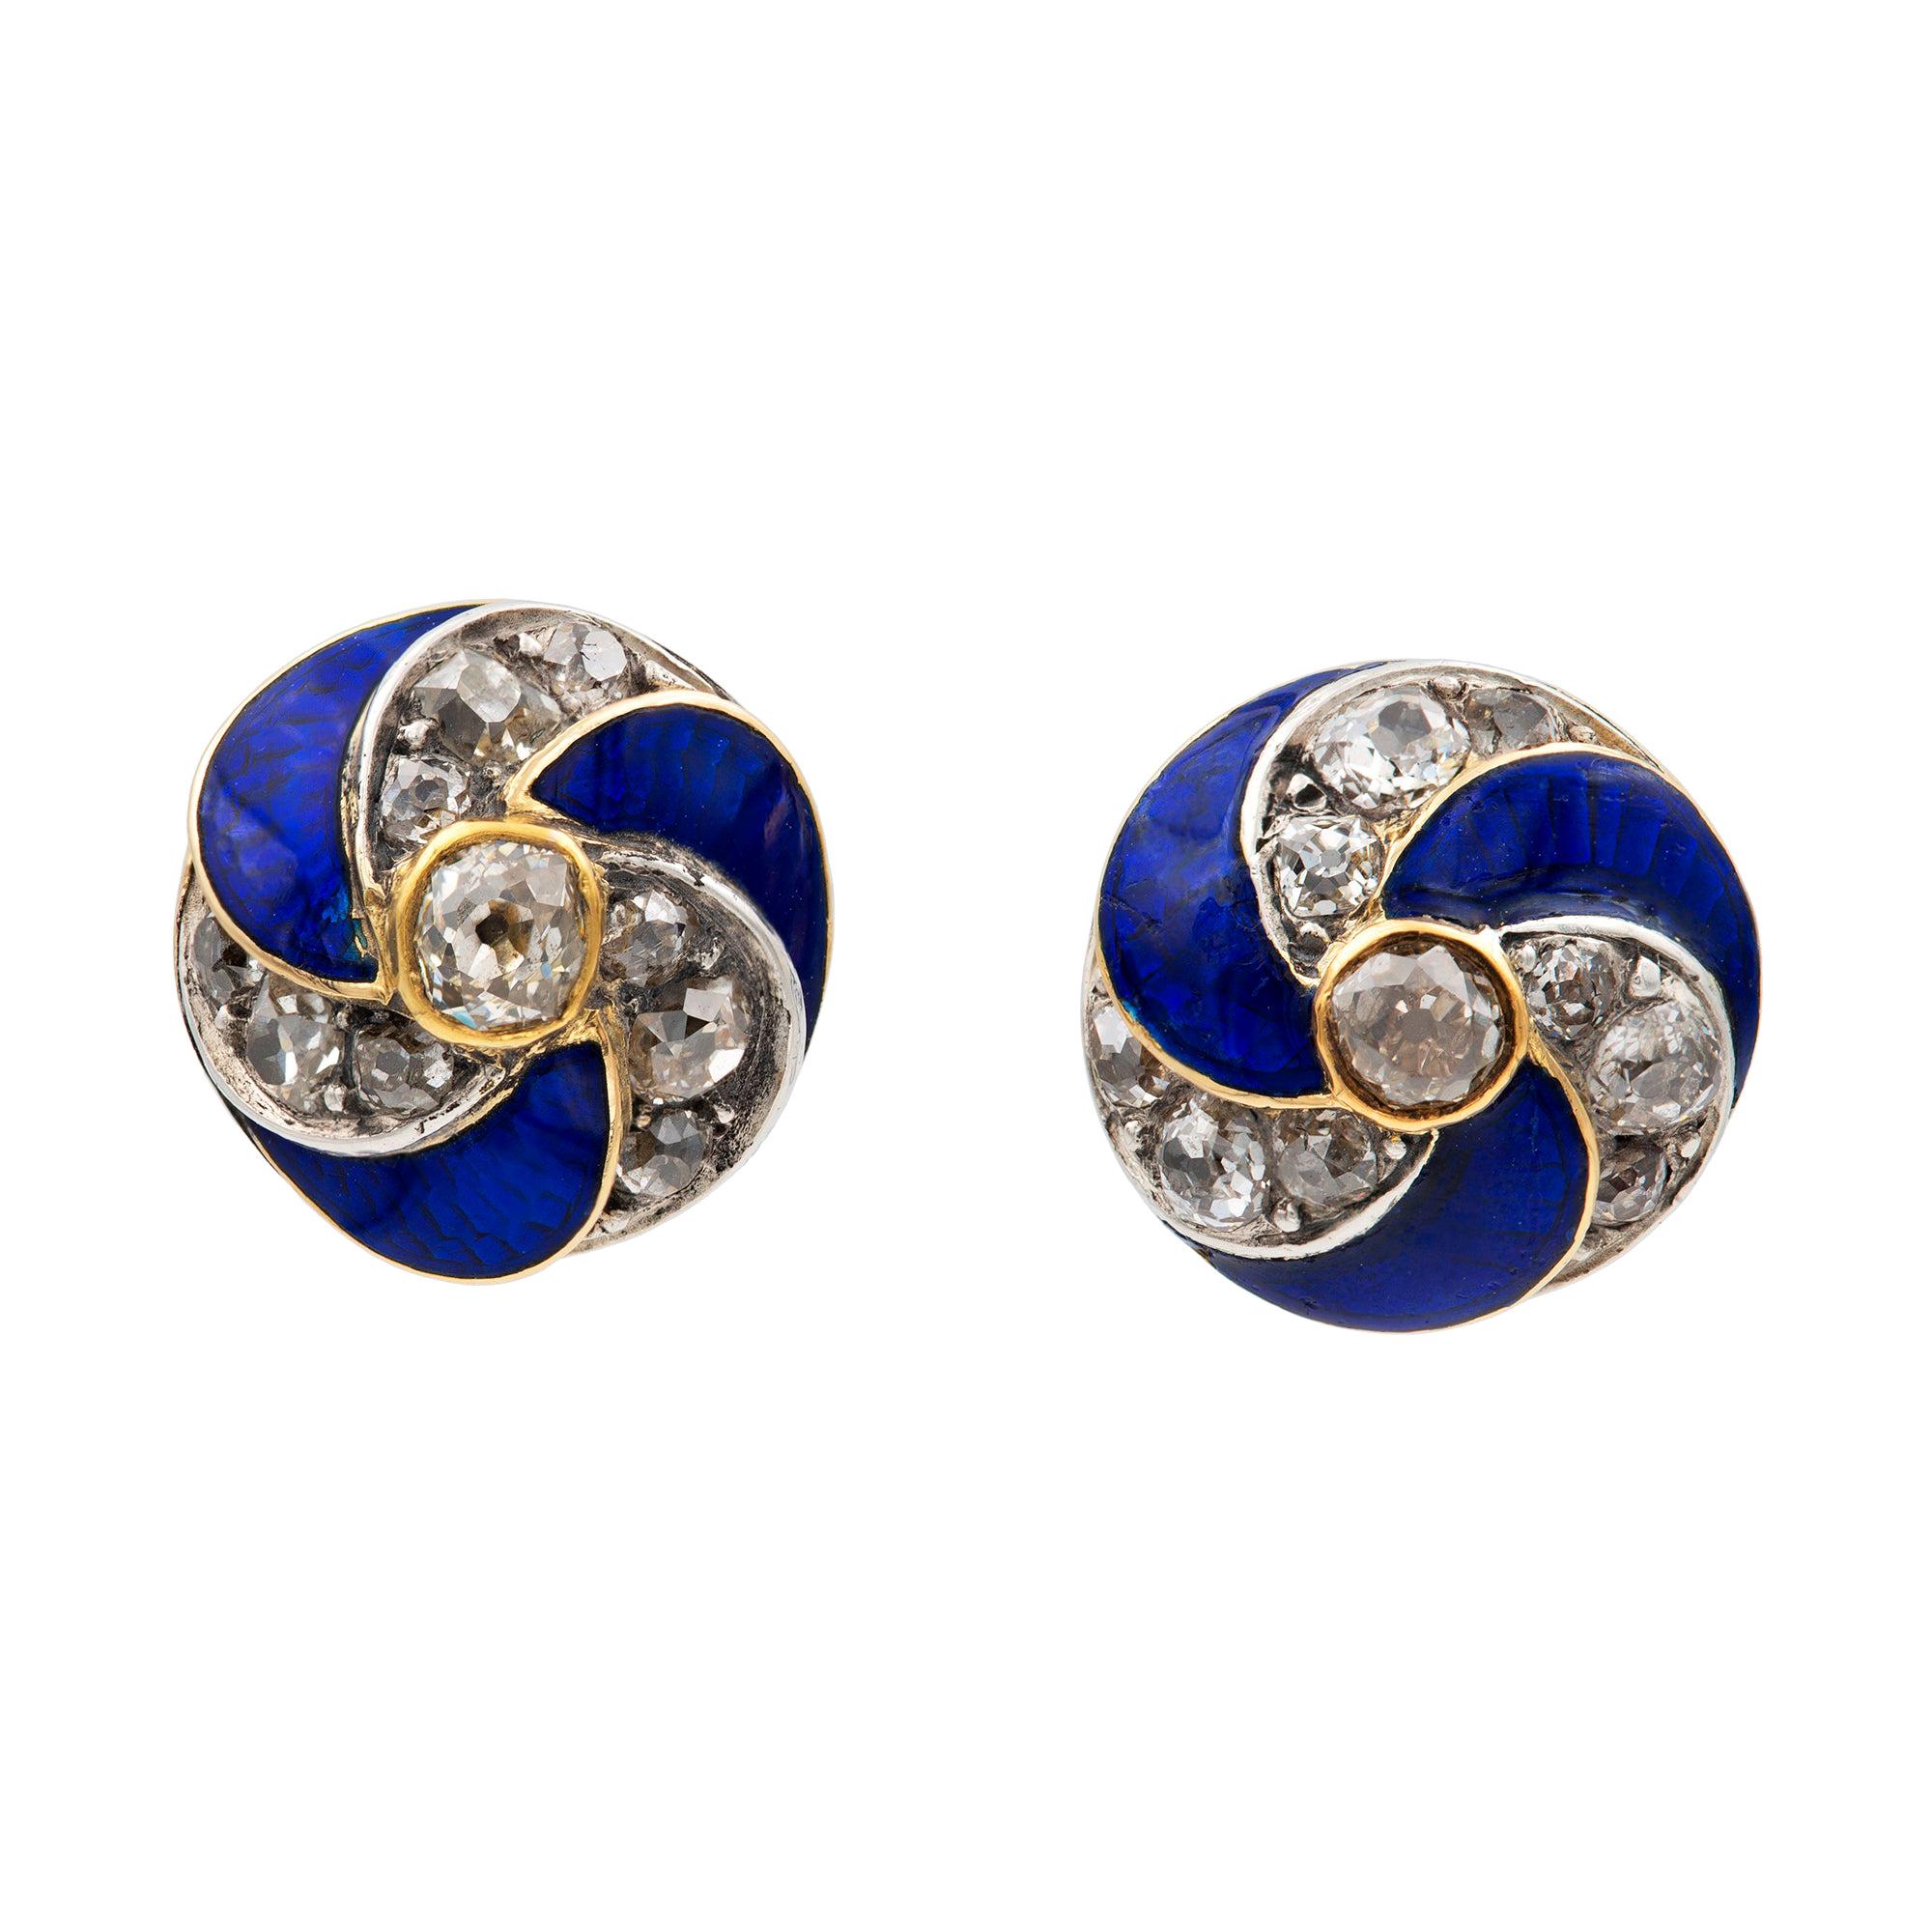 A Pair of Victorian Blue Enamel and Diamond Stud Earrings